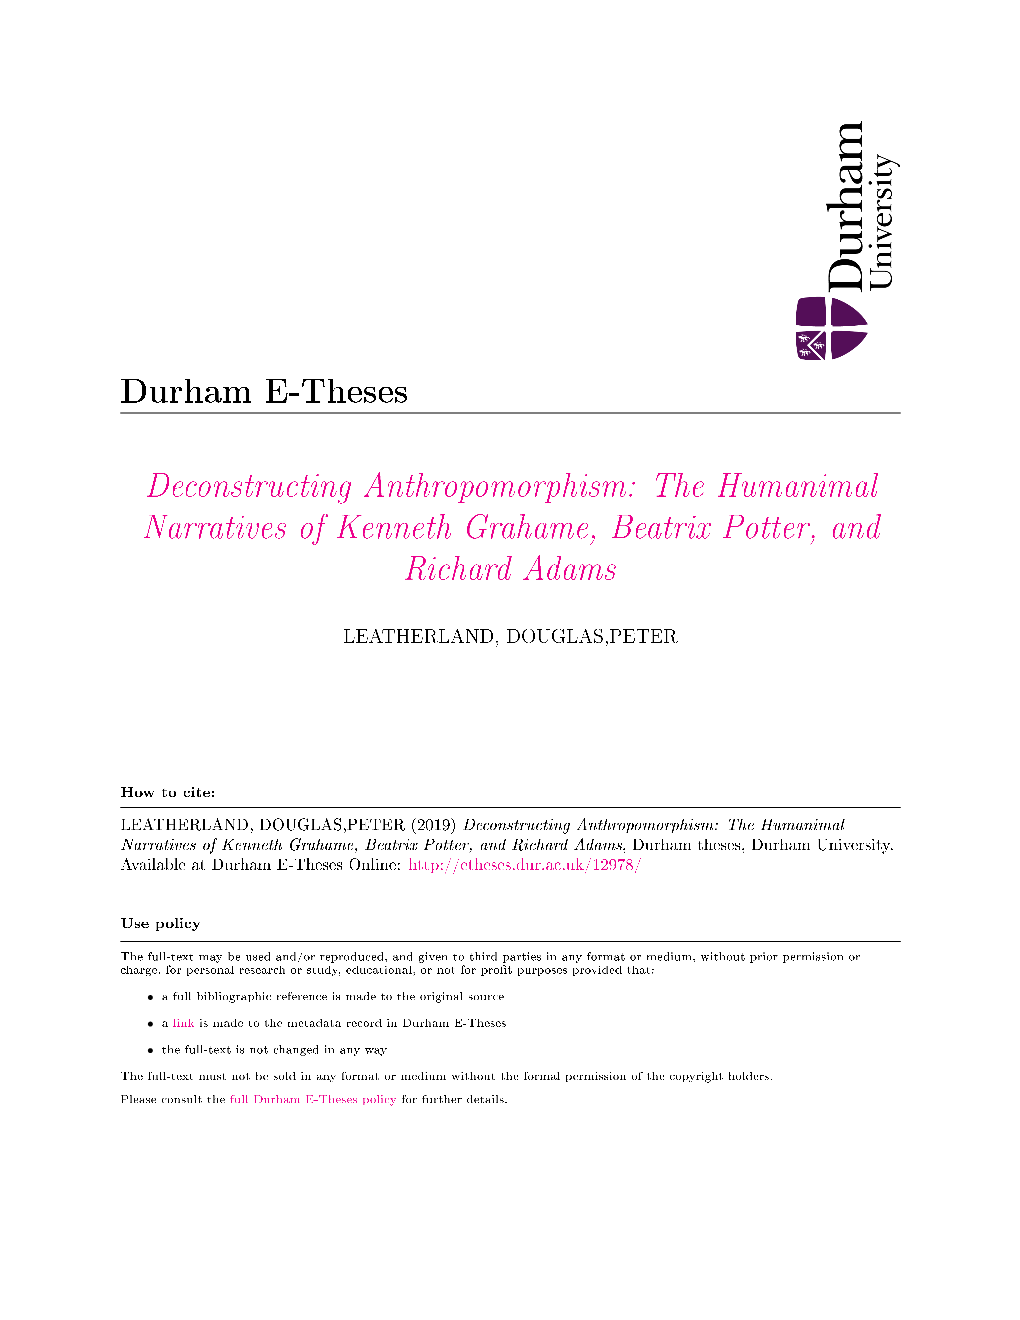 Deconstructing Anthropomorphism: the Humanimal Narratives of Kenneth Grahame, Beatrix Potter, and Richard Adams